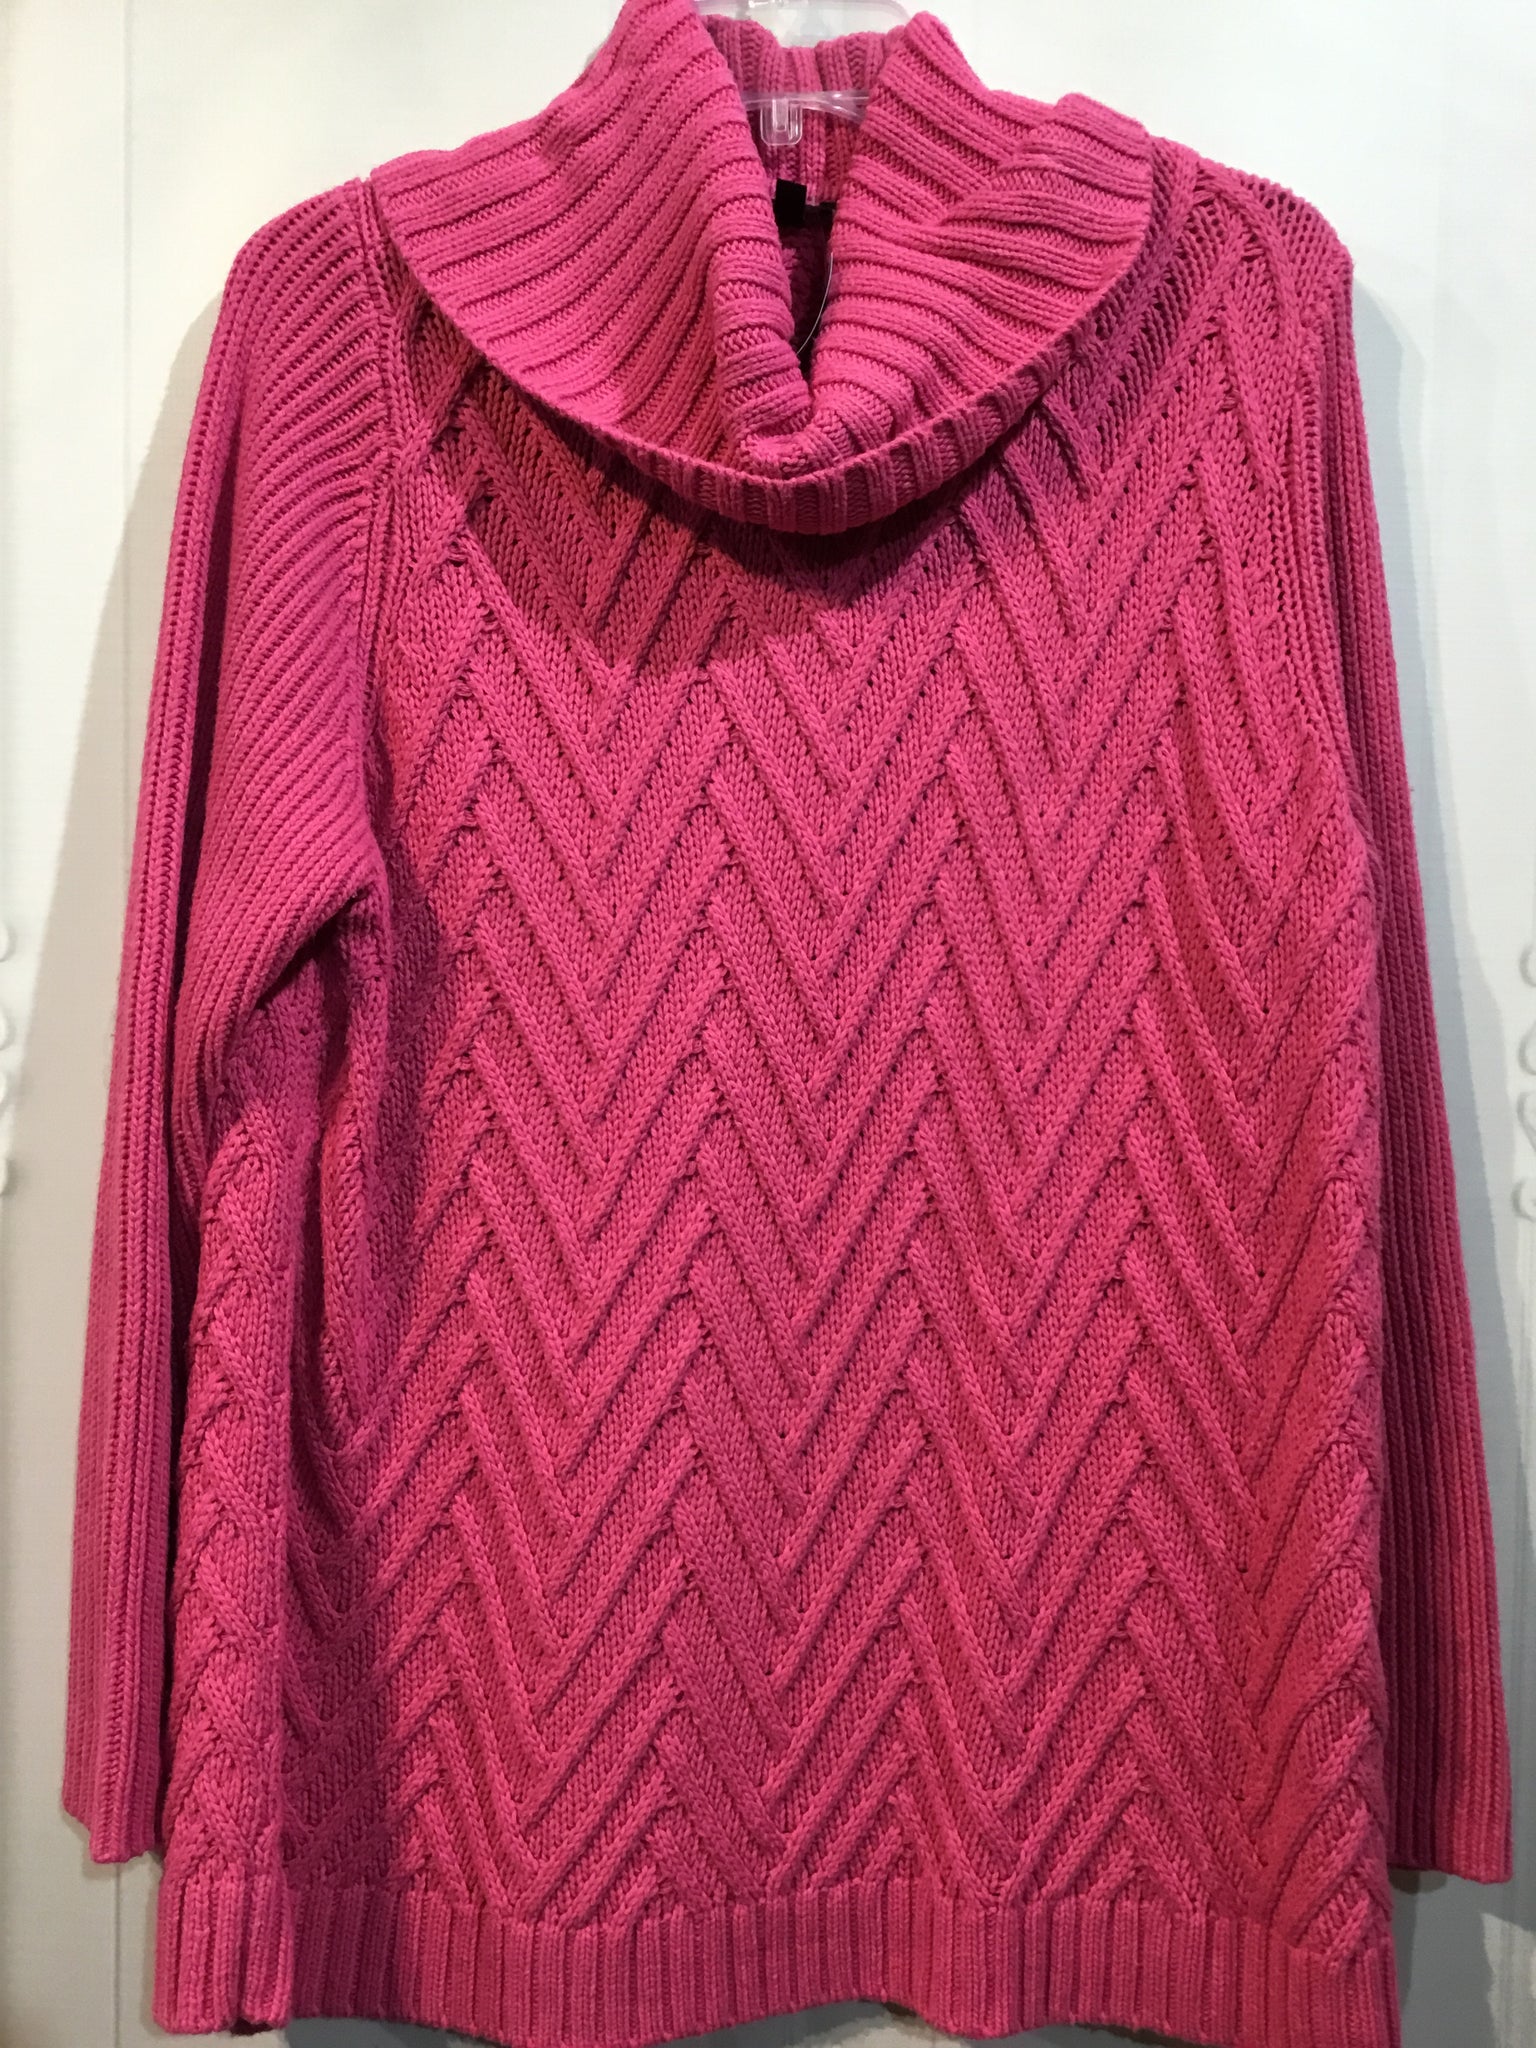 Talbots Size XLP/16-18P Pink Sweater